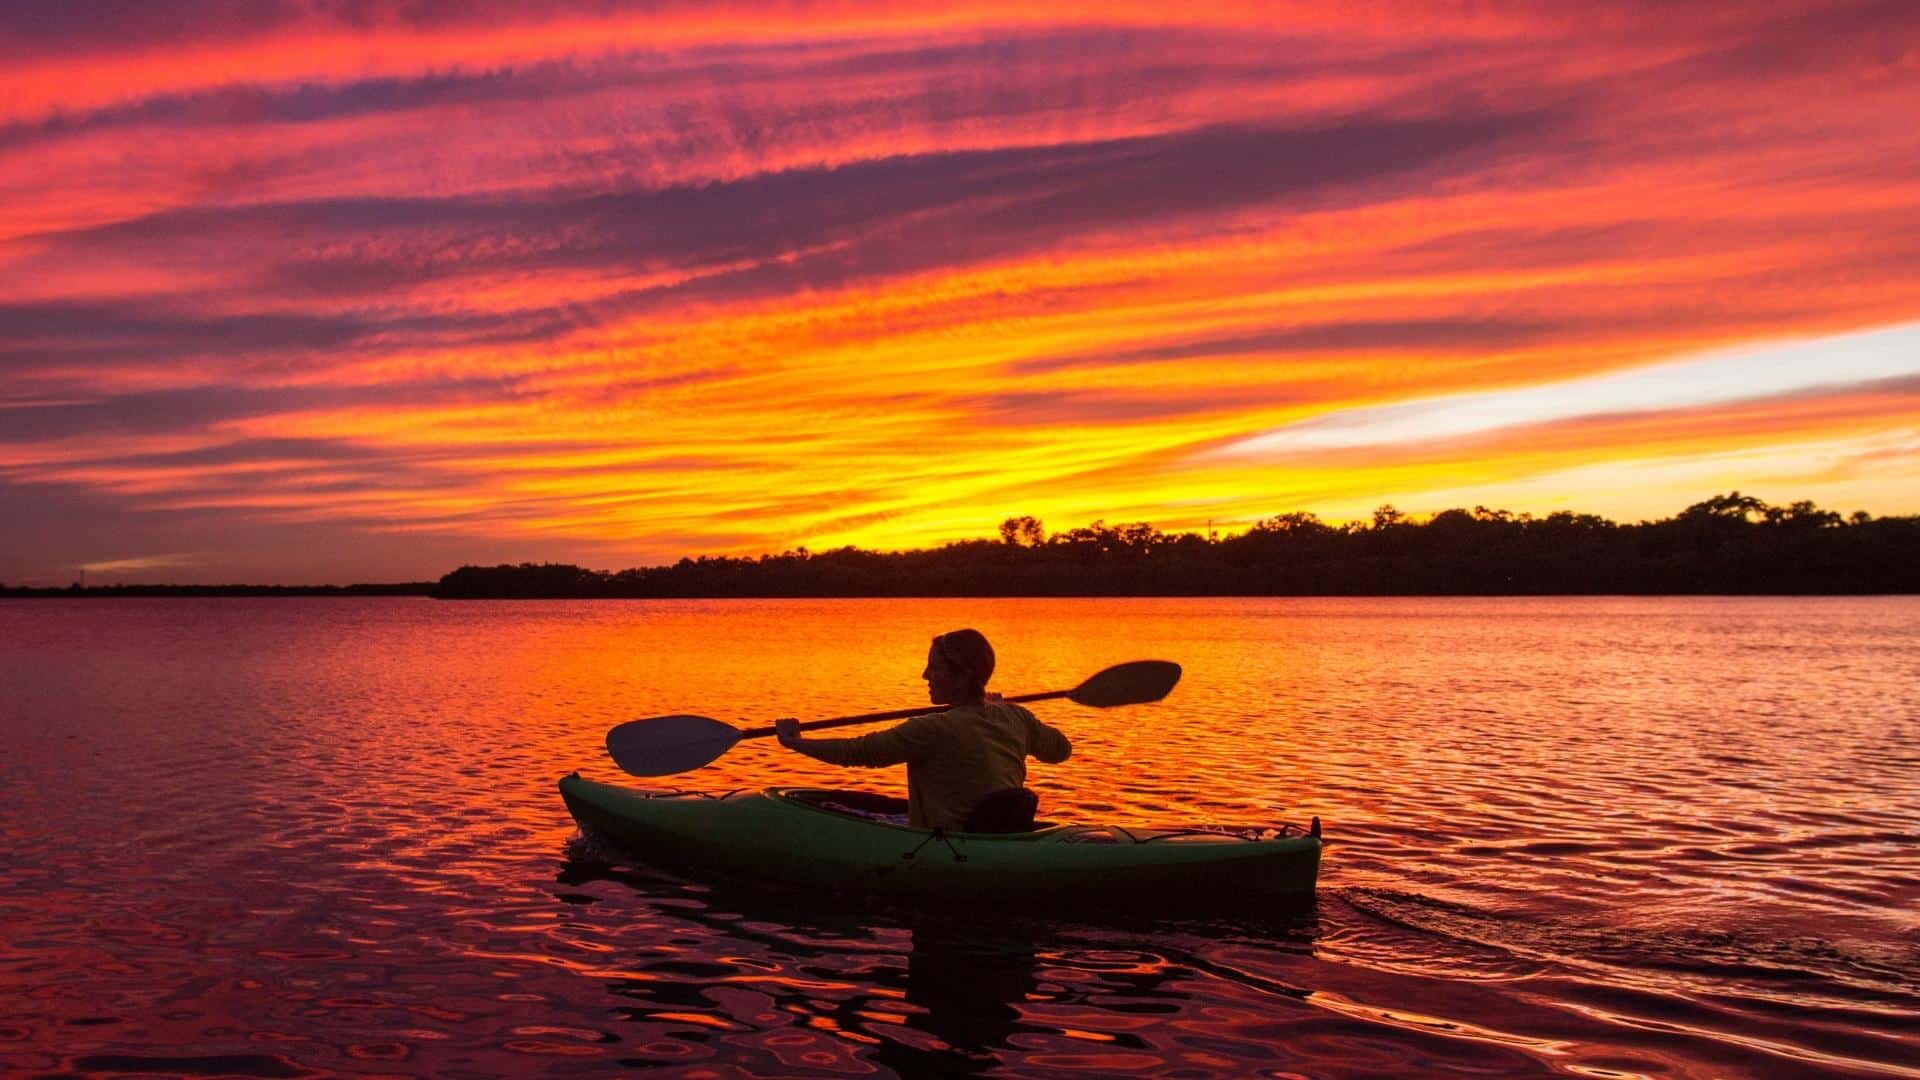 Sunset Kayaking near Orlando - Bioluminescence at Night